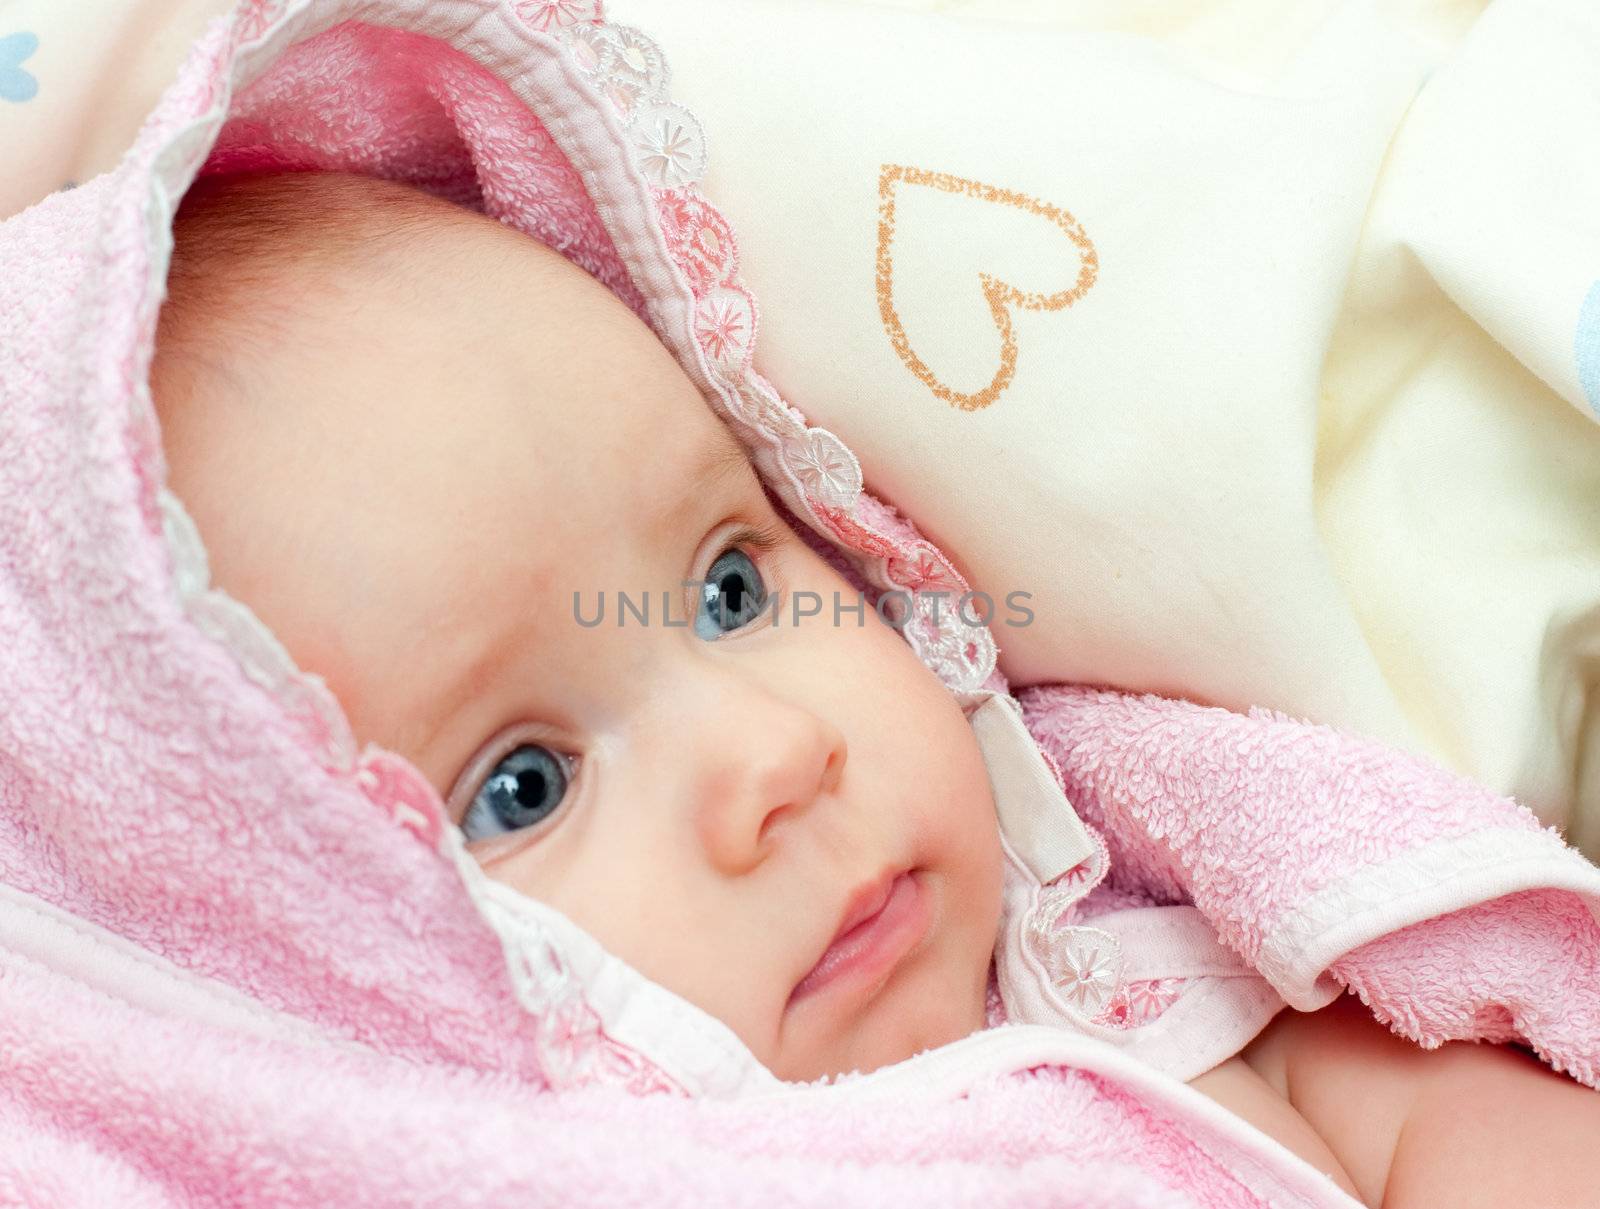 Infant in towel by naumoid